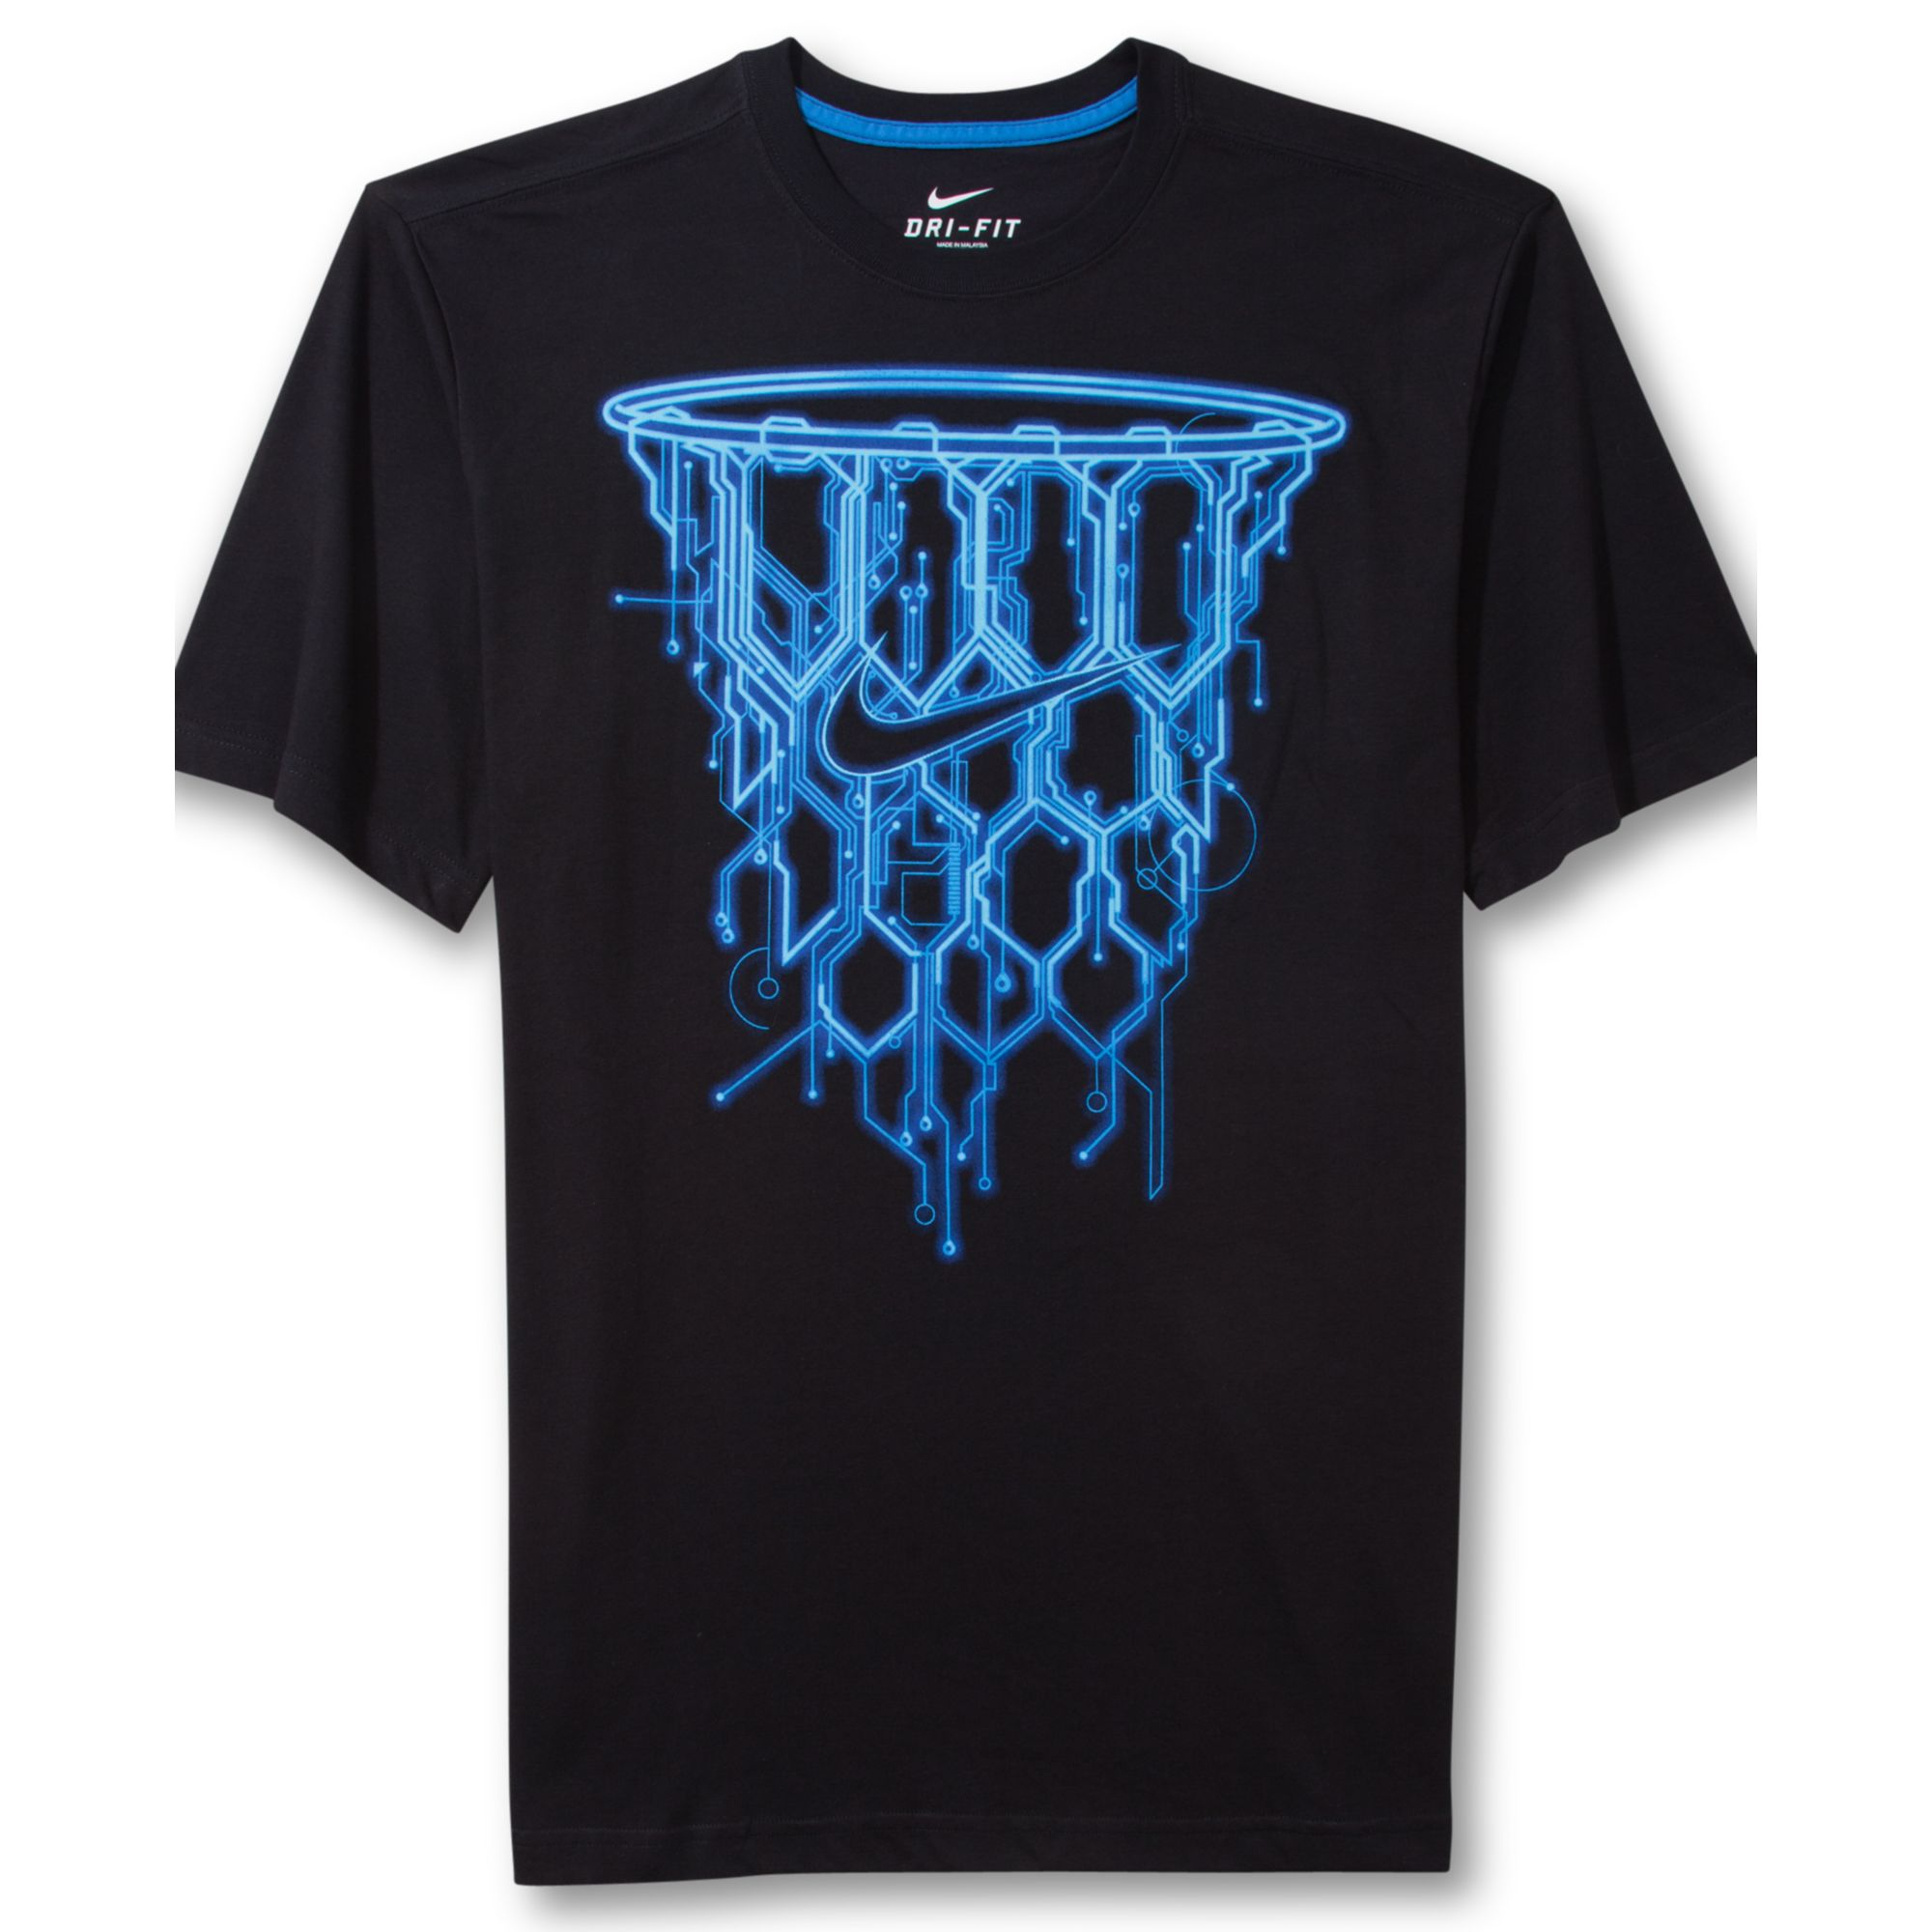 Nike Basketball Net Graphic Tshirt in Black/Blue (Blue) for Men - Lyst